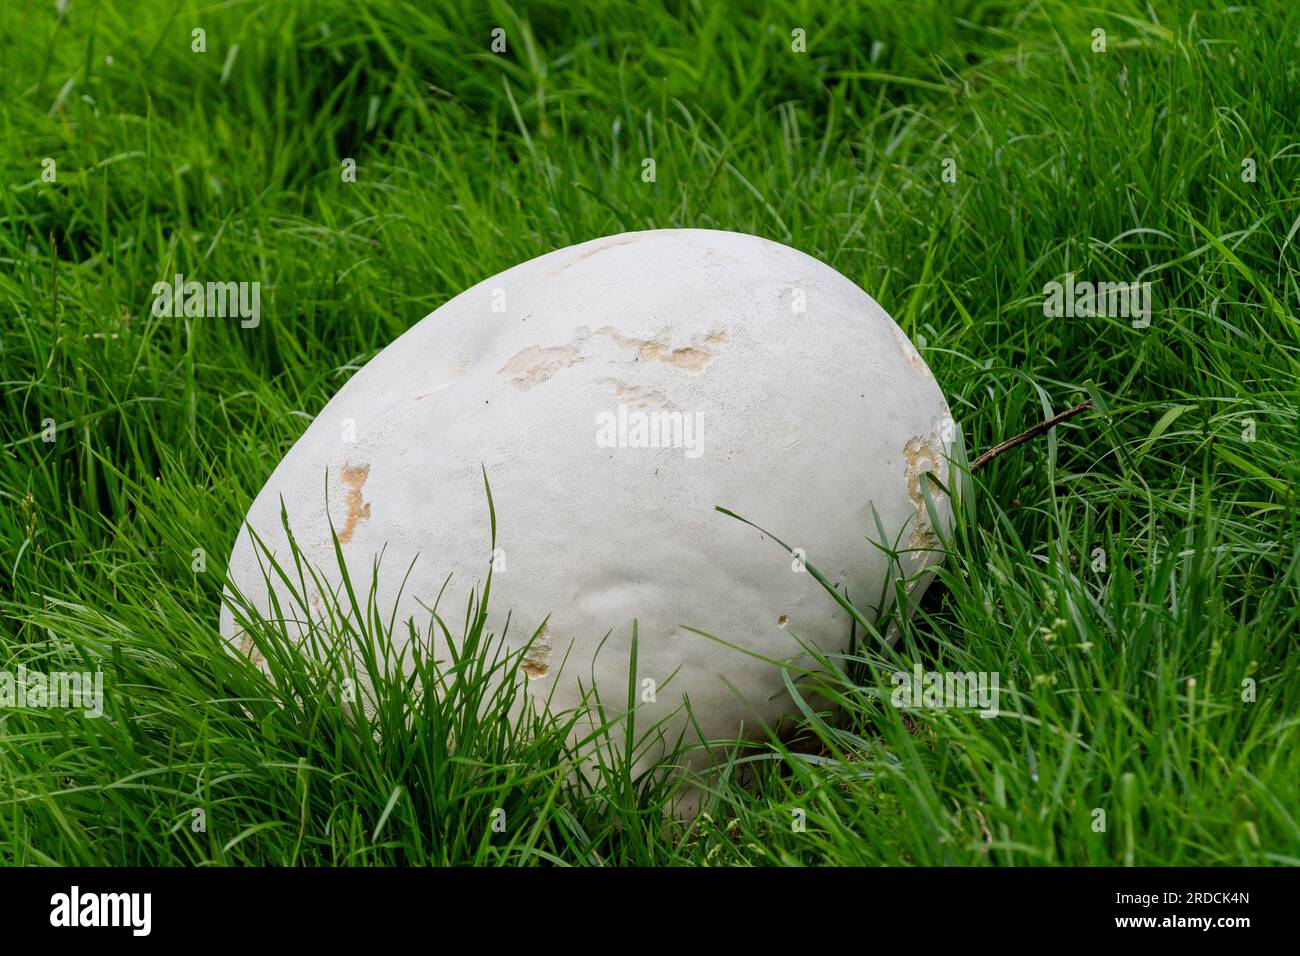 Giant Puffball Fungus Calvatia gigantea or Giant Puffball Mushroom growning in grass field. Stock Photo